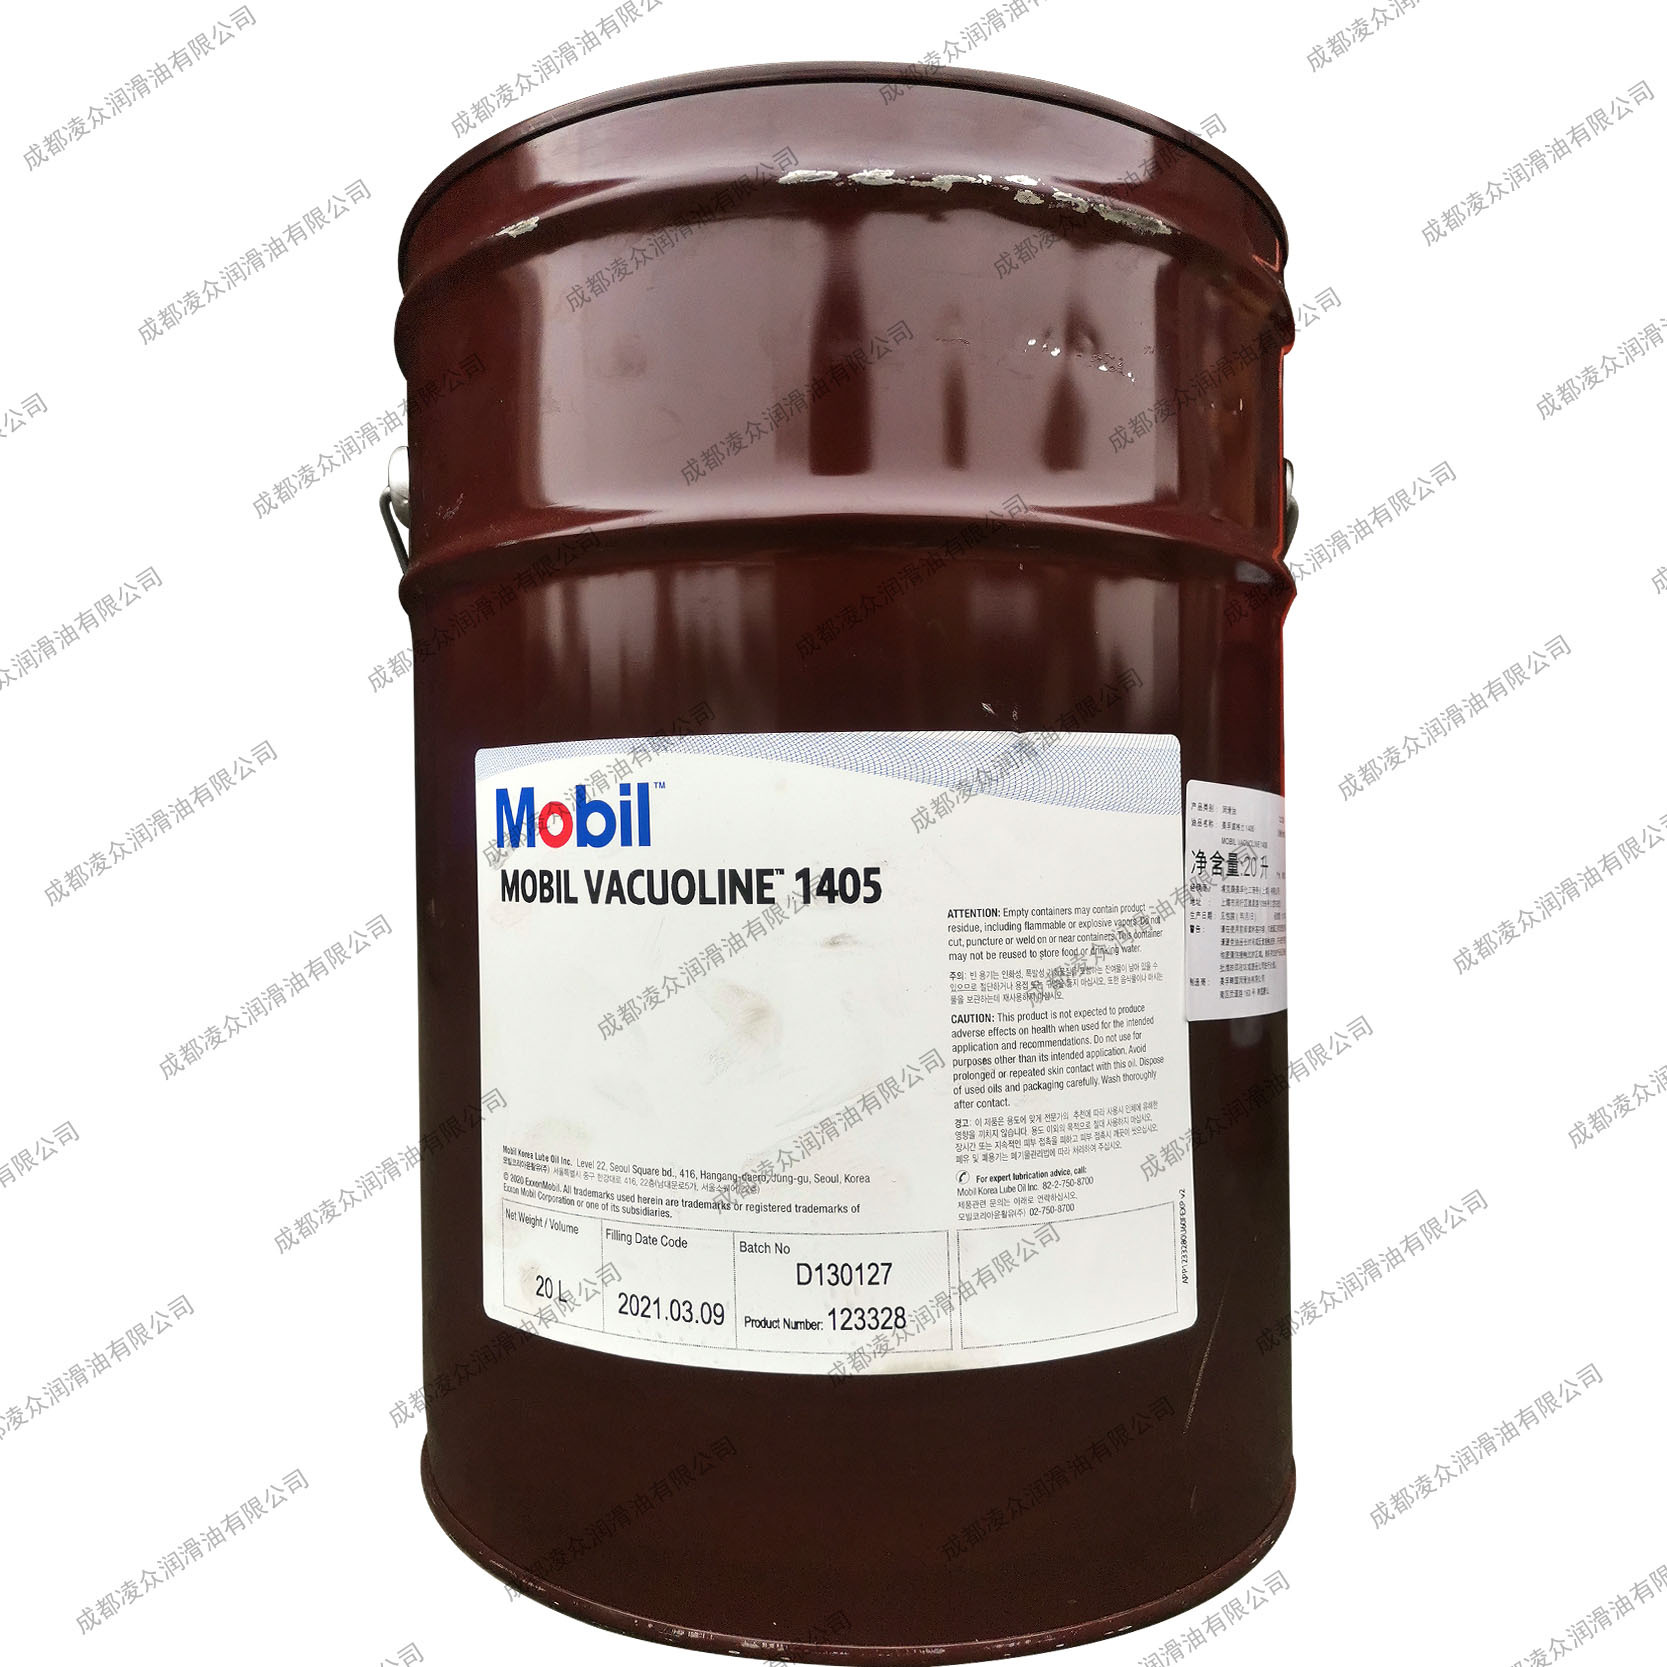 M|obil Vacuoline 1405 美|孚威格力1405 ISO VG32液压导轨润滑油